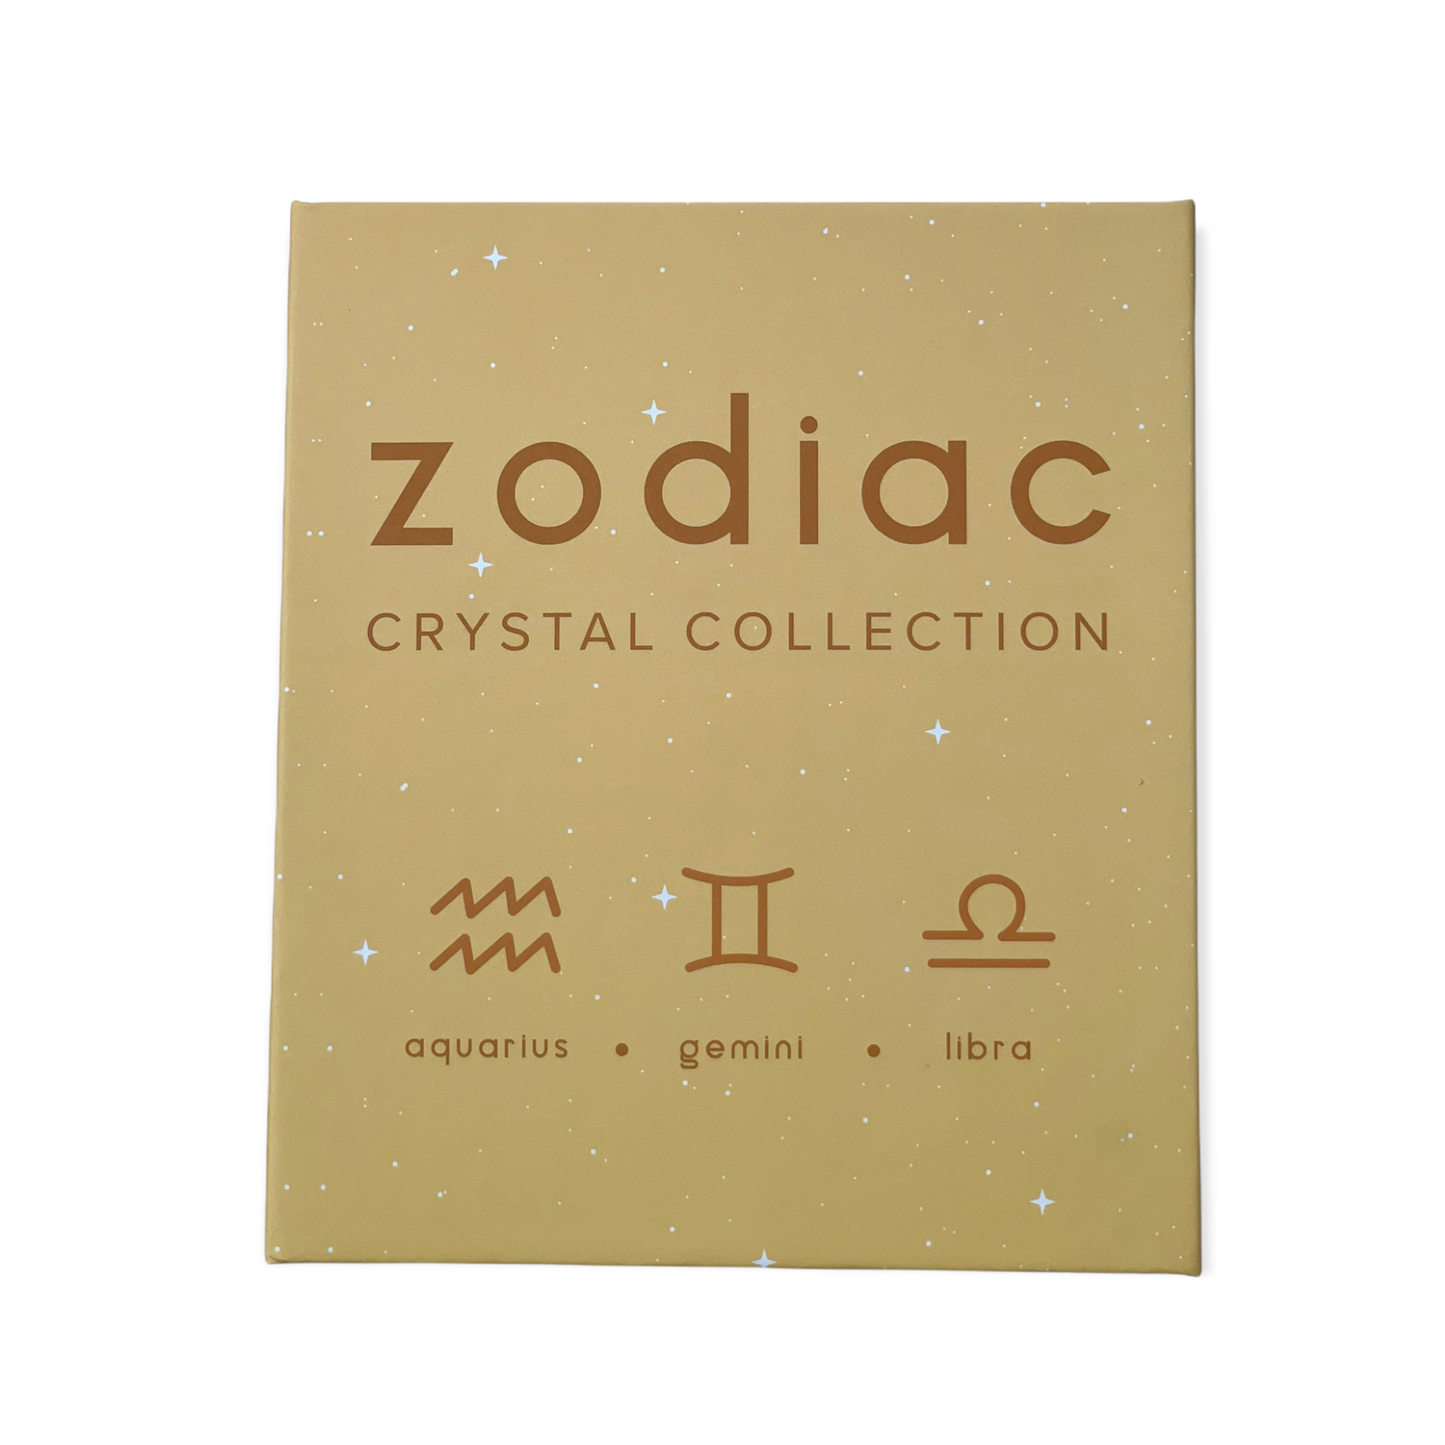 Zodiac Crystal Collection (Air Signs) Aquarius, Gemini, and Libra